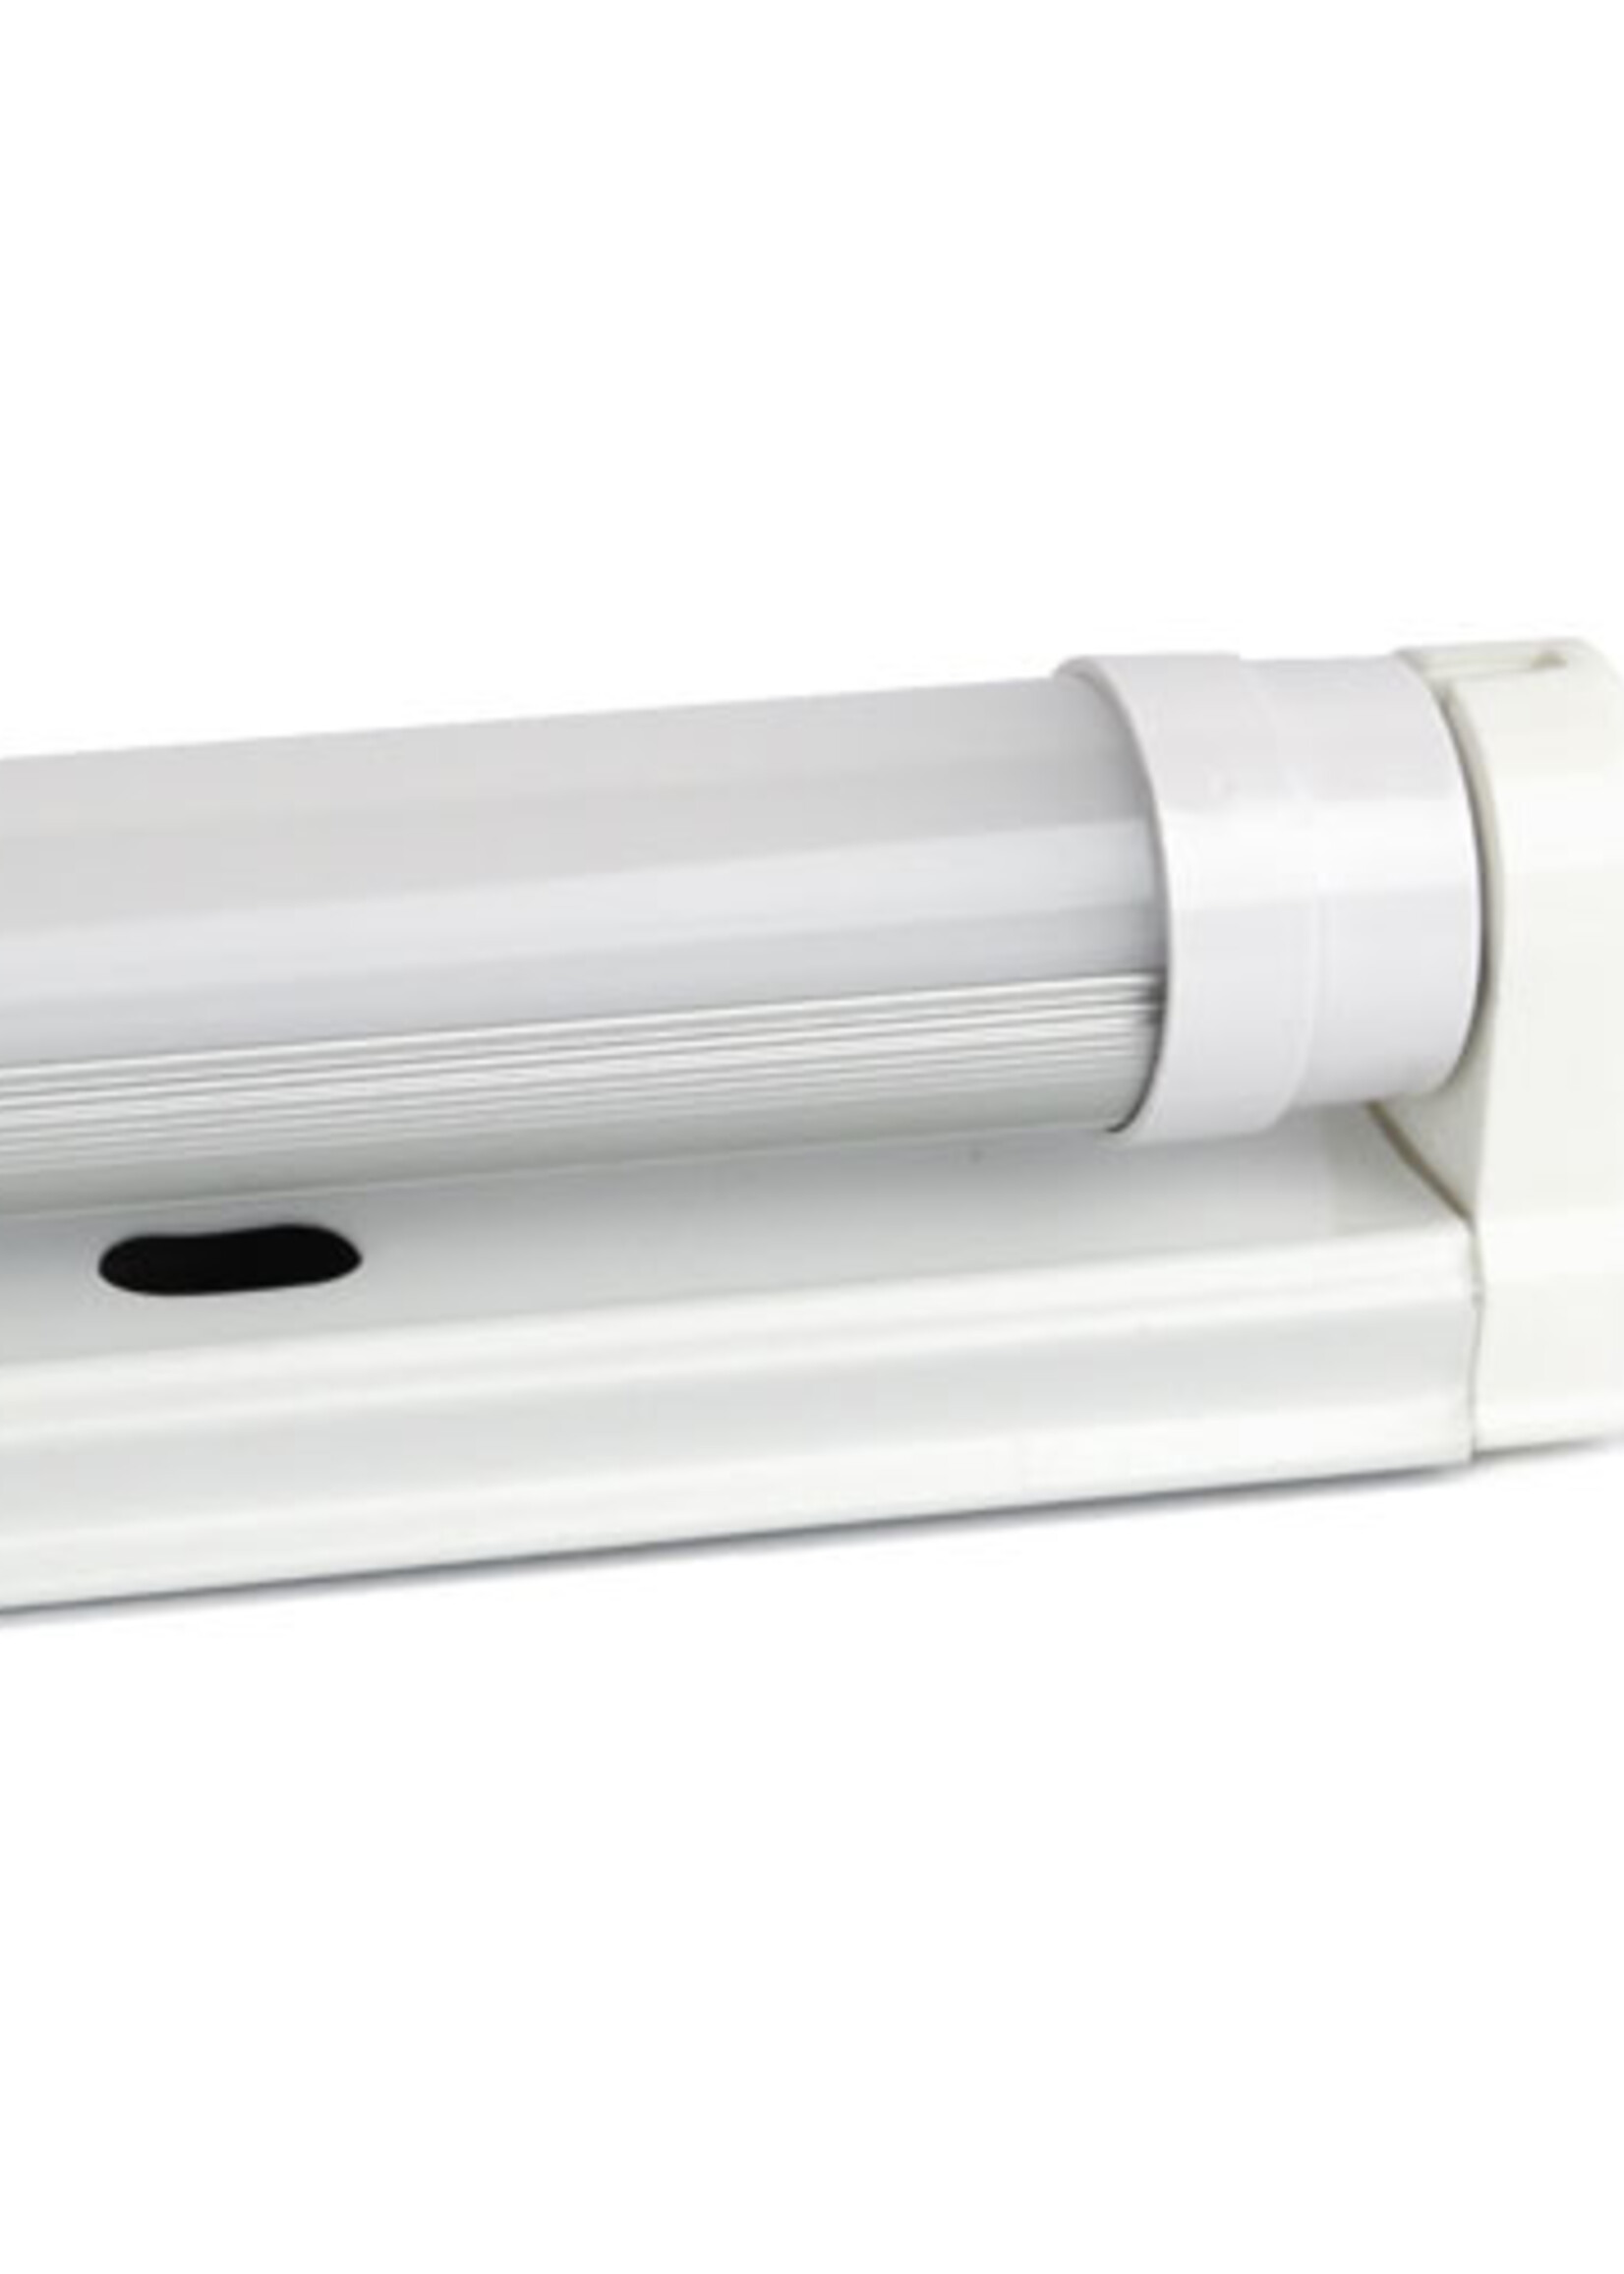 LEDWINKEL-Online Smart WiFi LED Tube Light 60cm RGB Colored Light 9W